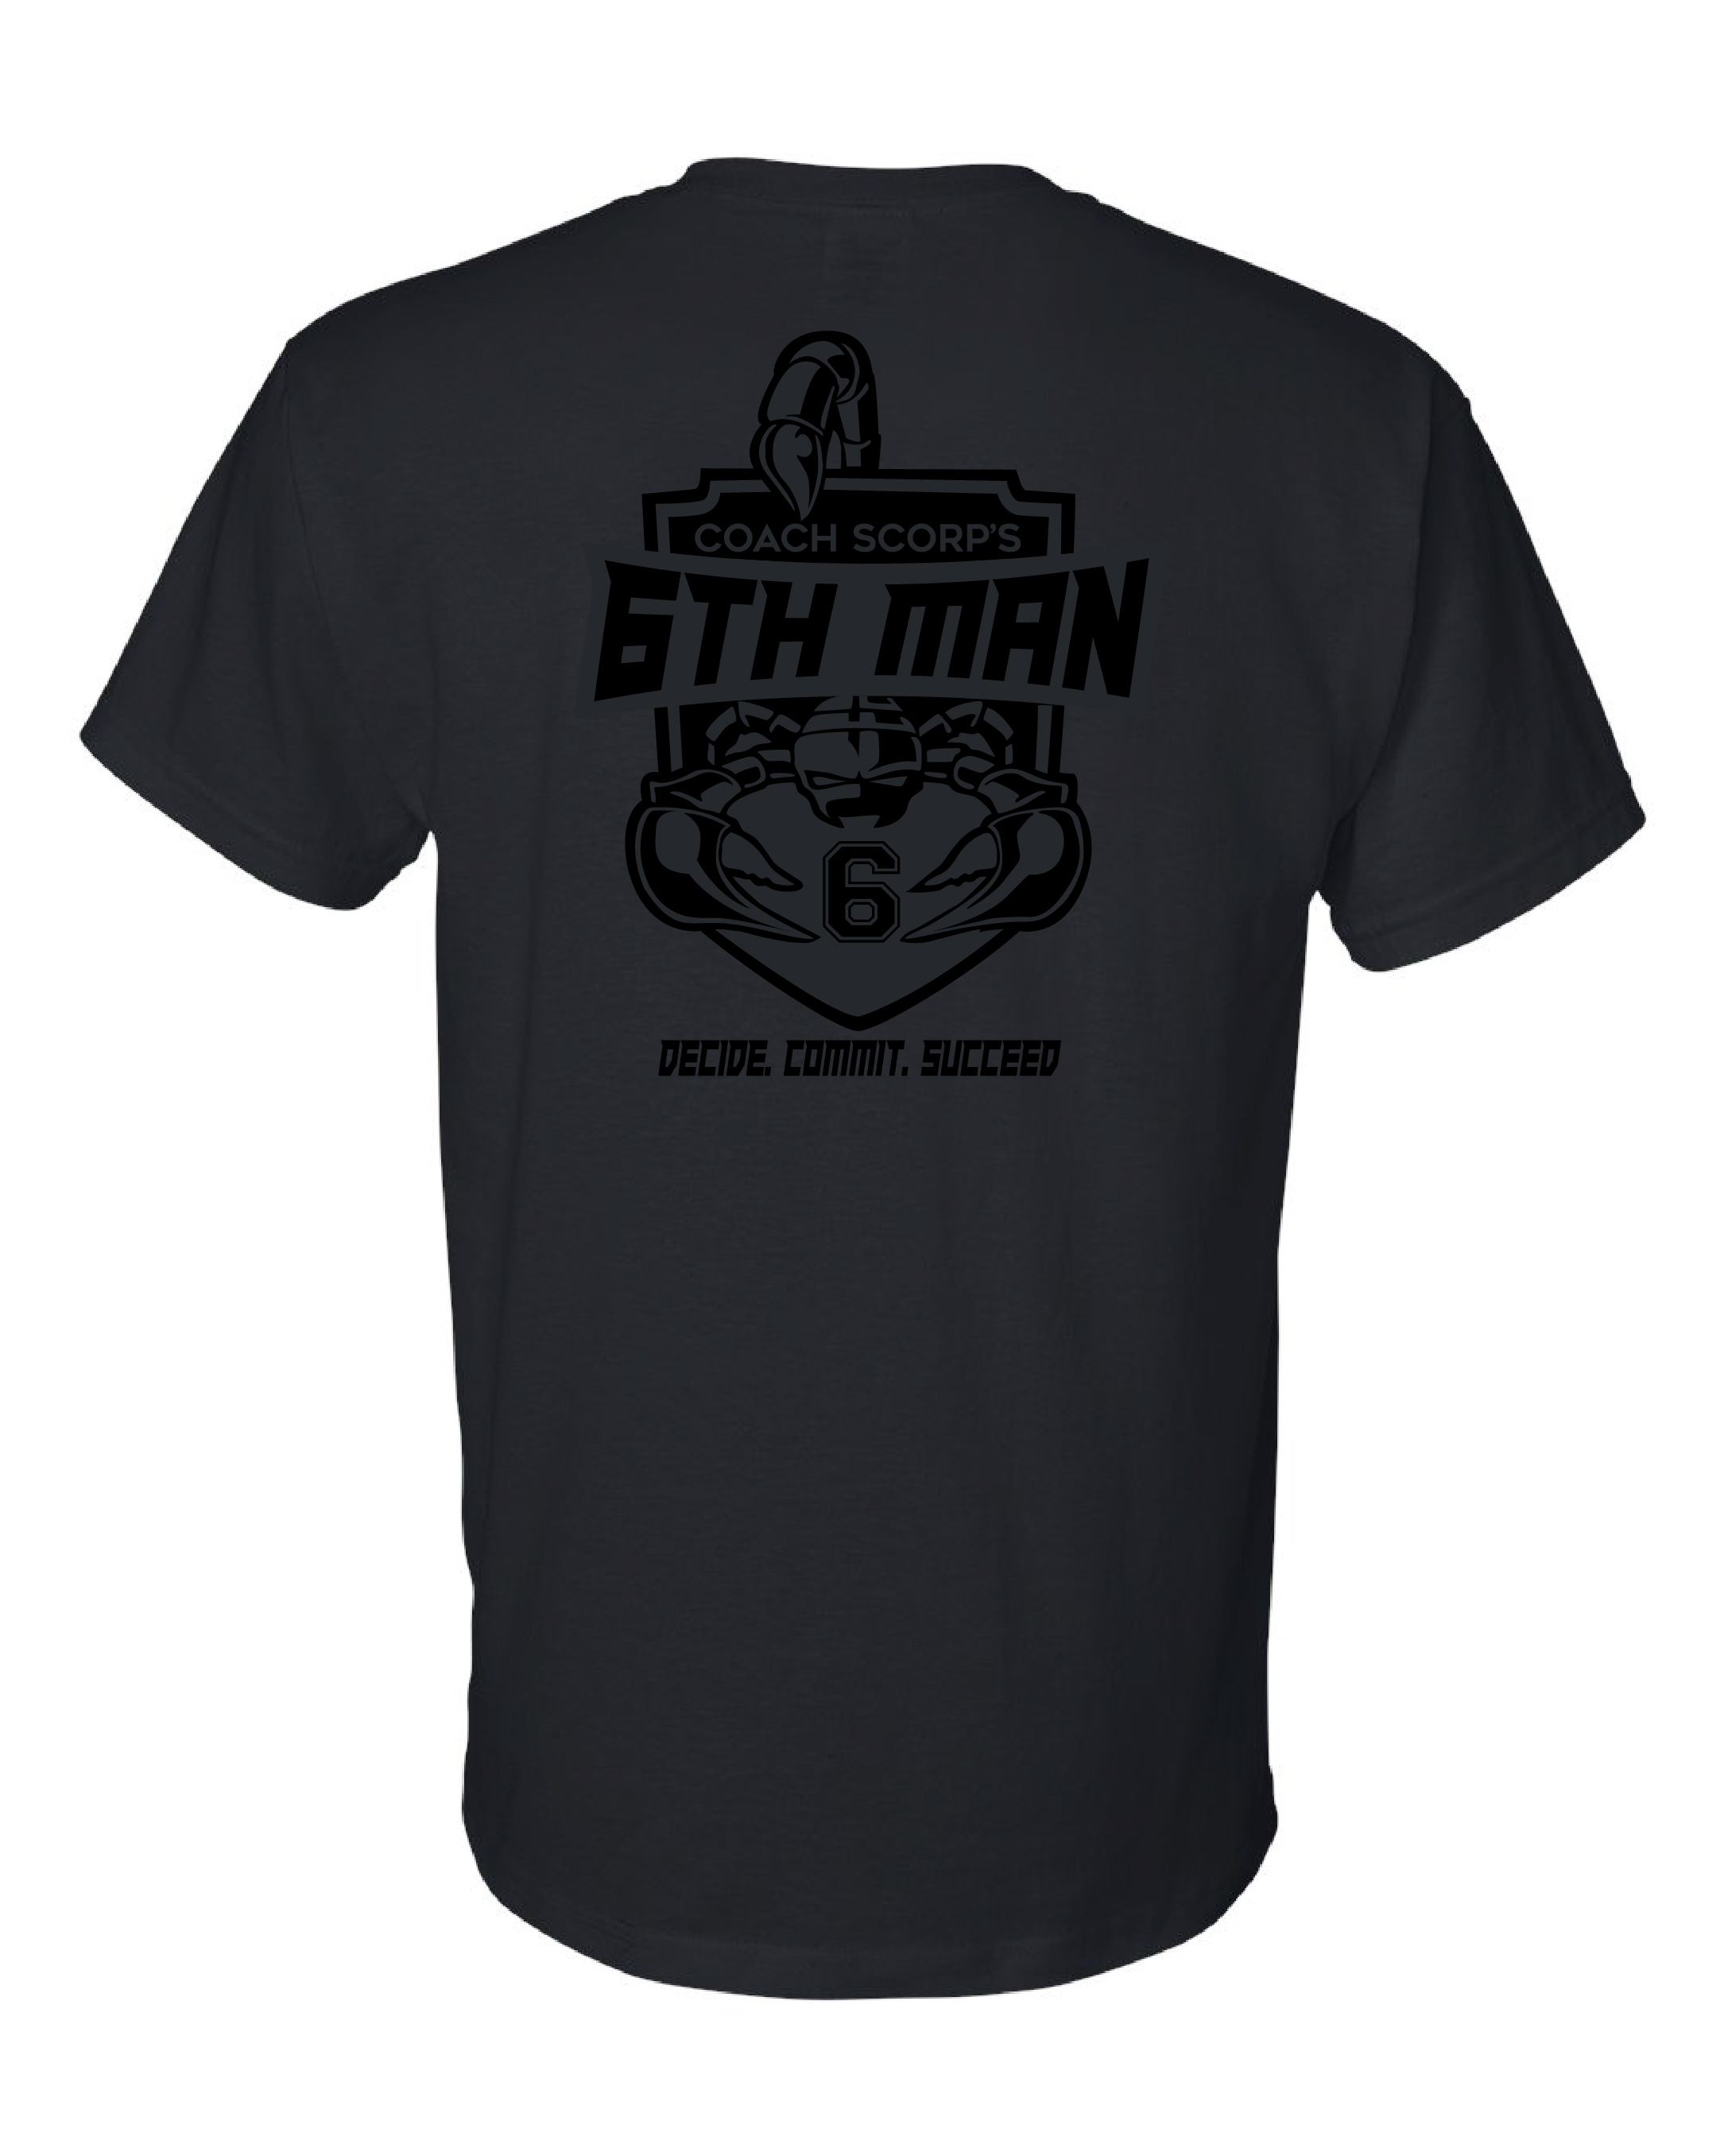 Gildan - DryBlend 50/50 T-Shirt - 6th Man - No Flag